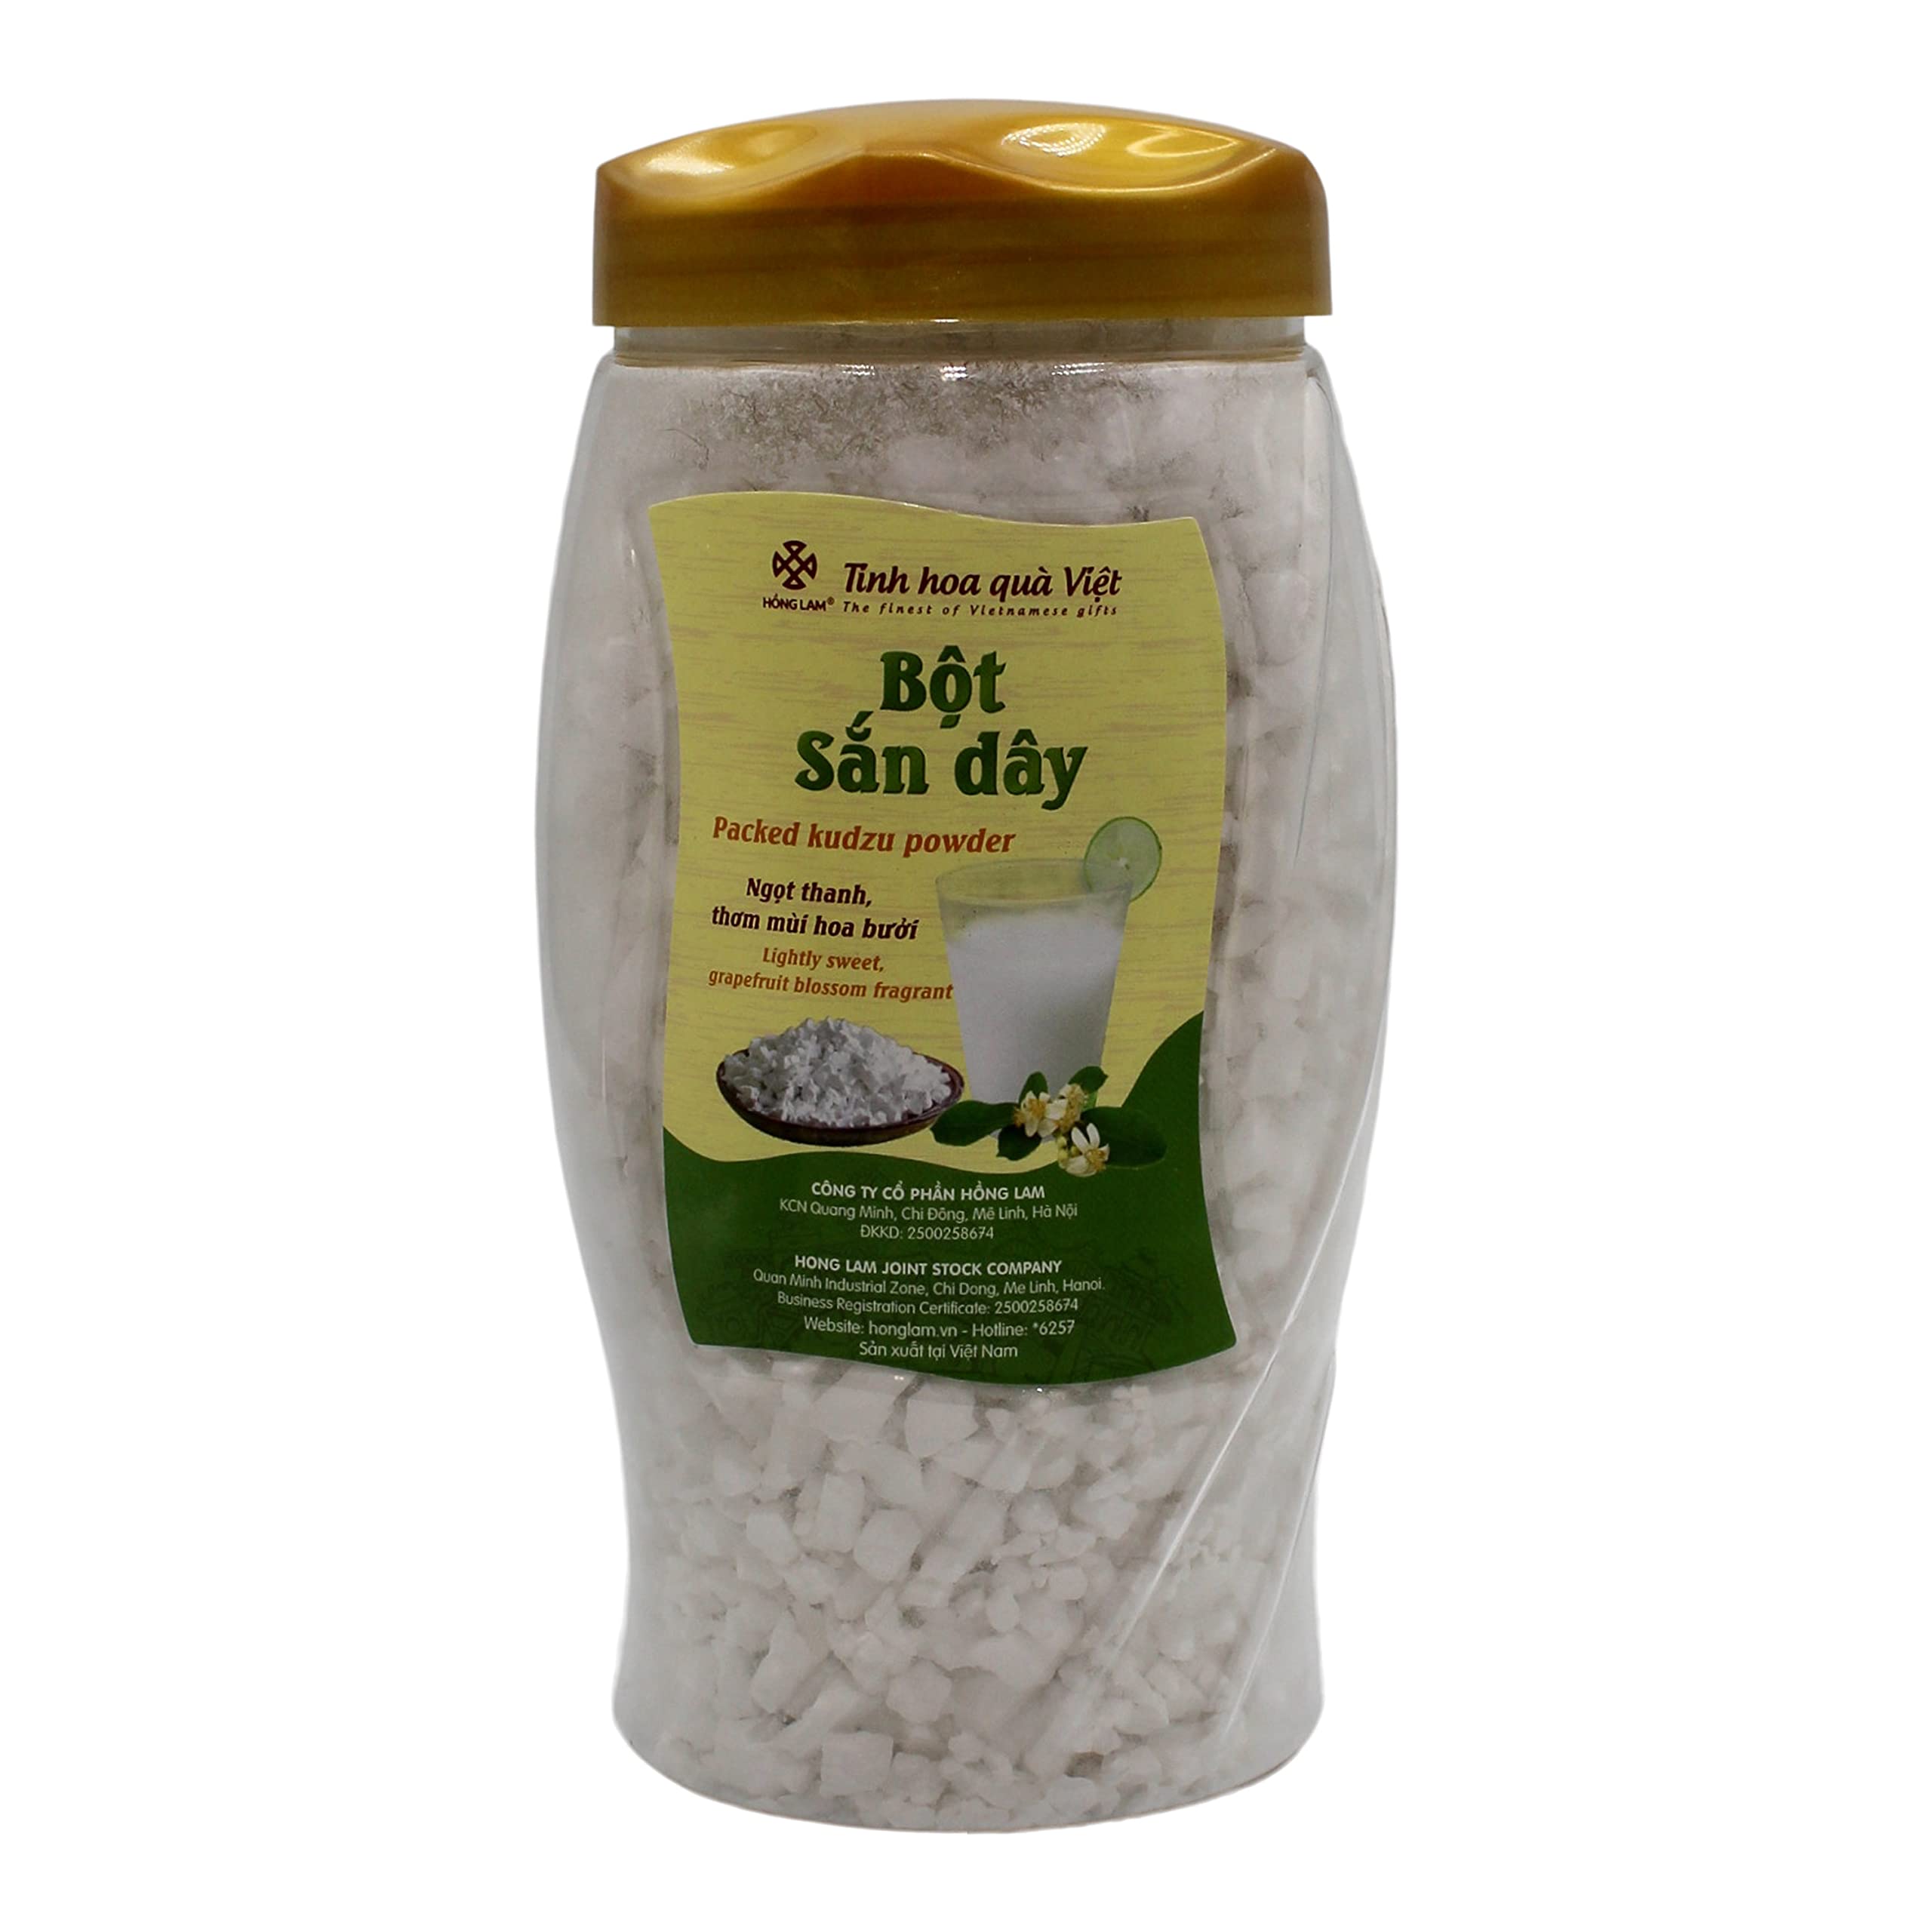 Habanerofire Kudzu Bundle Hong Lam Bot San Day Packed Kudzu Powder Chunks  24.7 Ounce Jar and